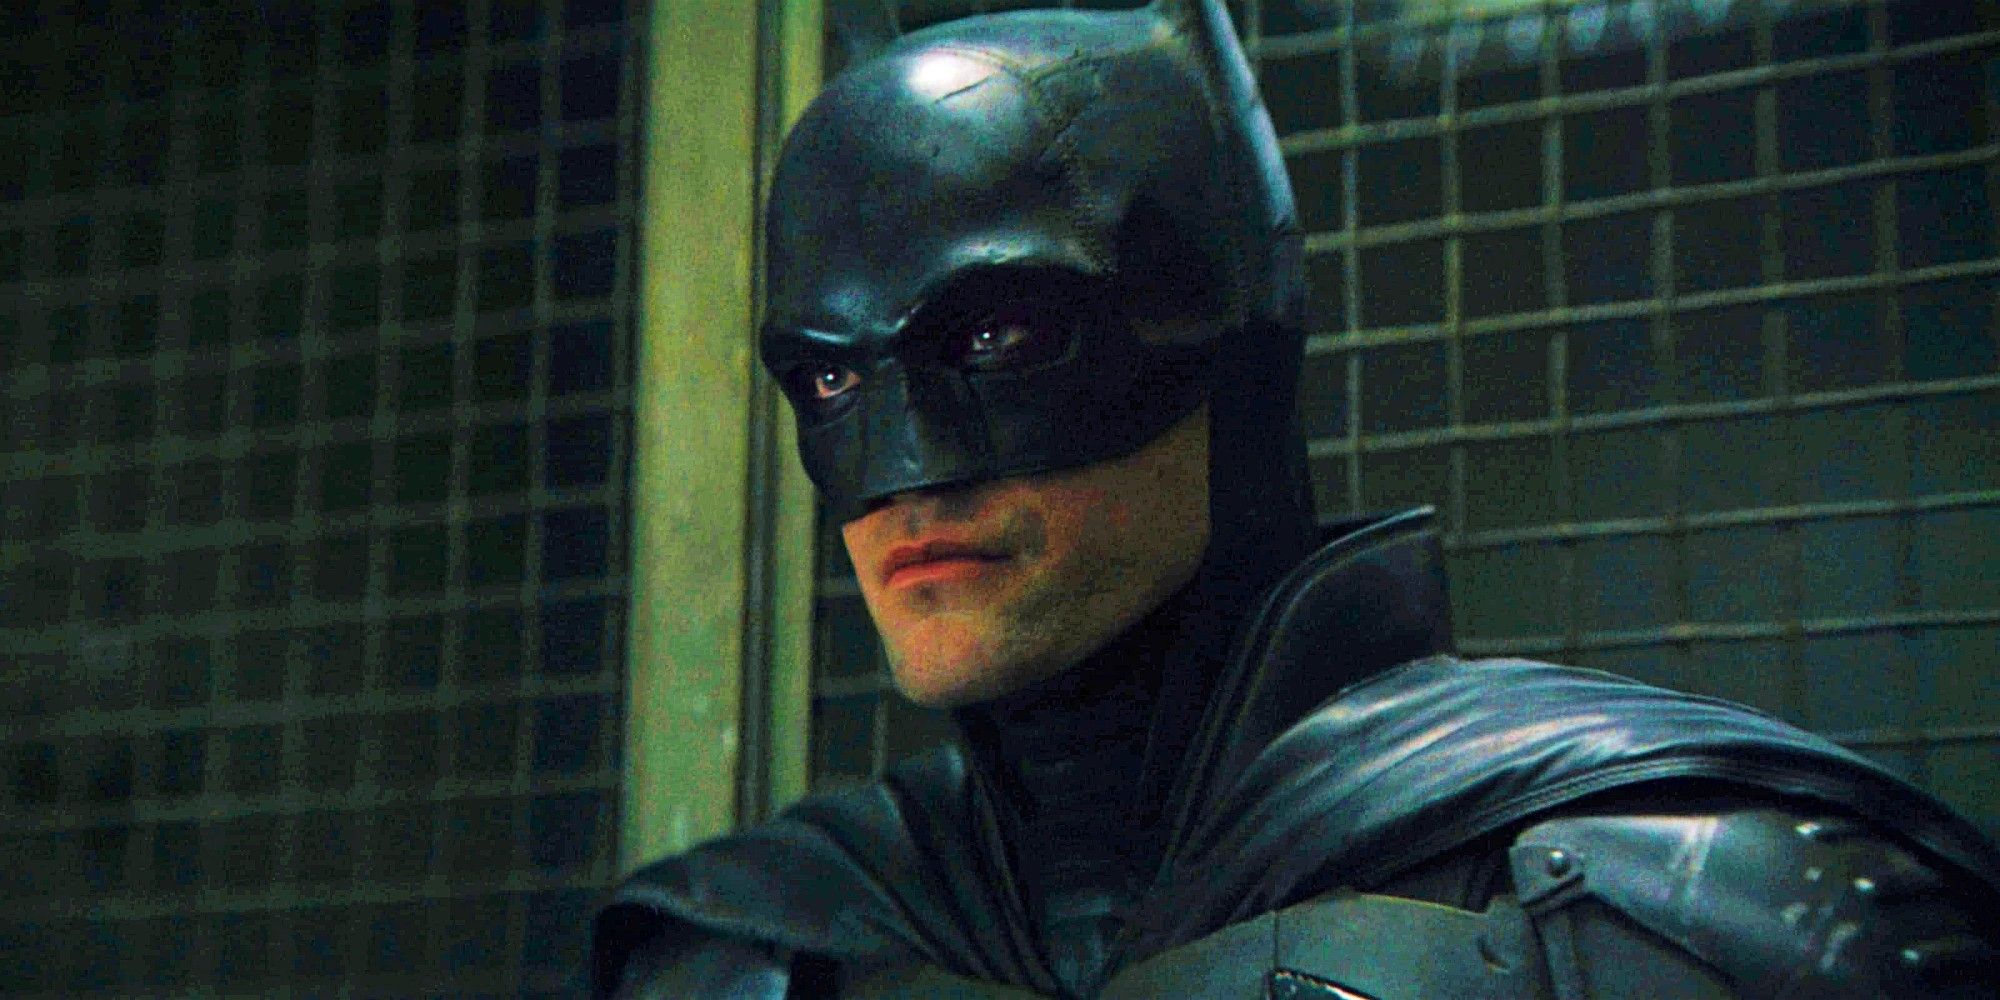 Robert Pattinson As Bruce Wayne In Full Batman Costume In GCPD HQ In The Batman